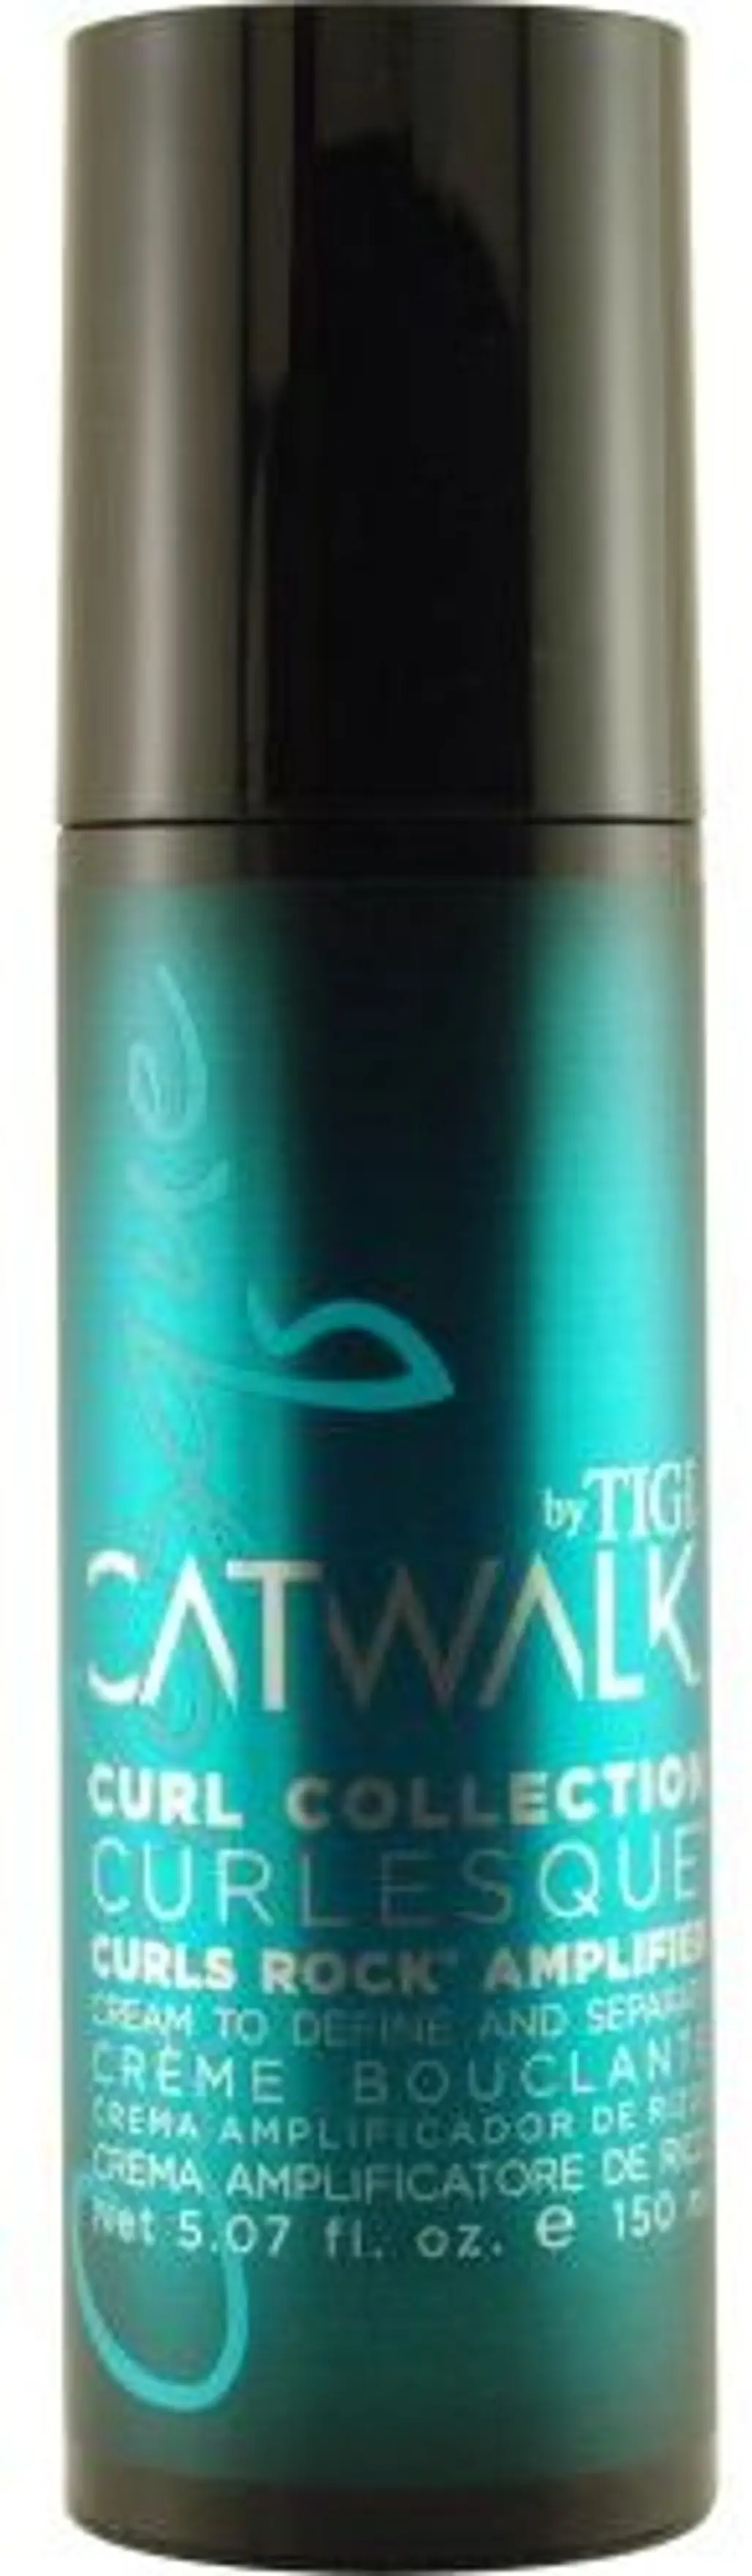 TIGI Catwalk Curlesque Curls Rock Amplifier